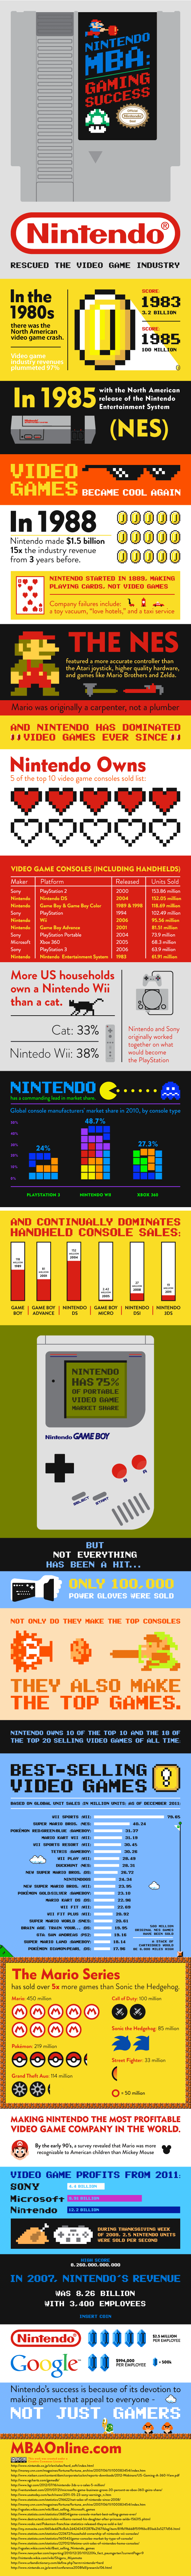 Nintendo-success-infographic